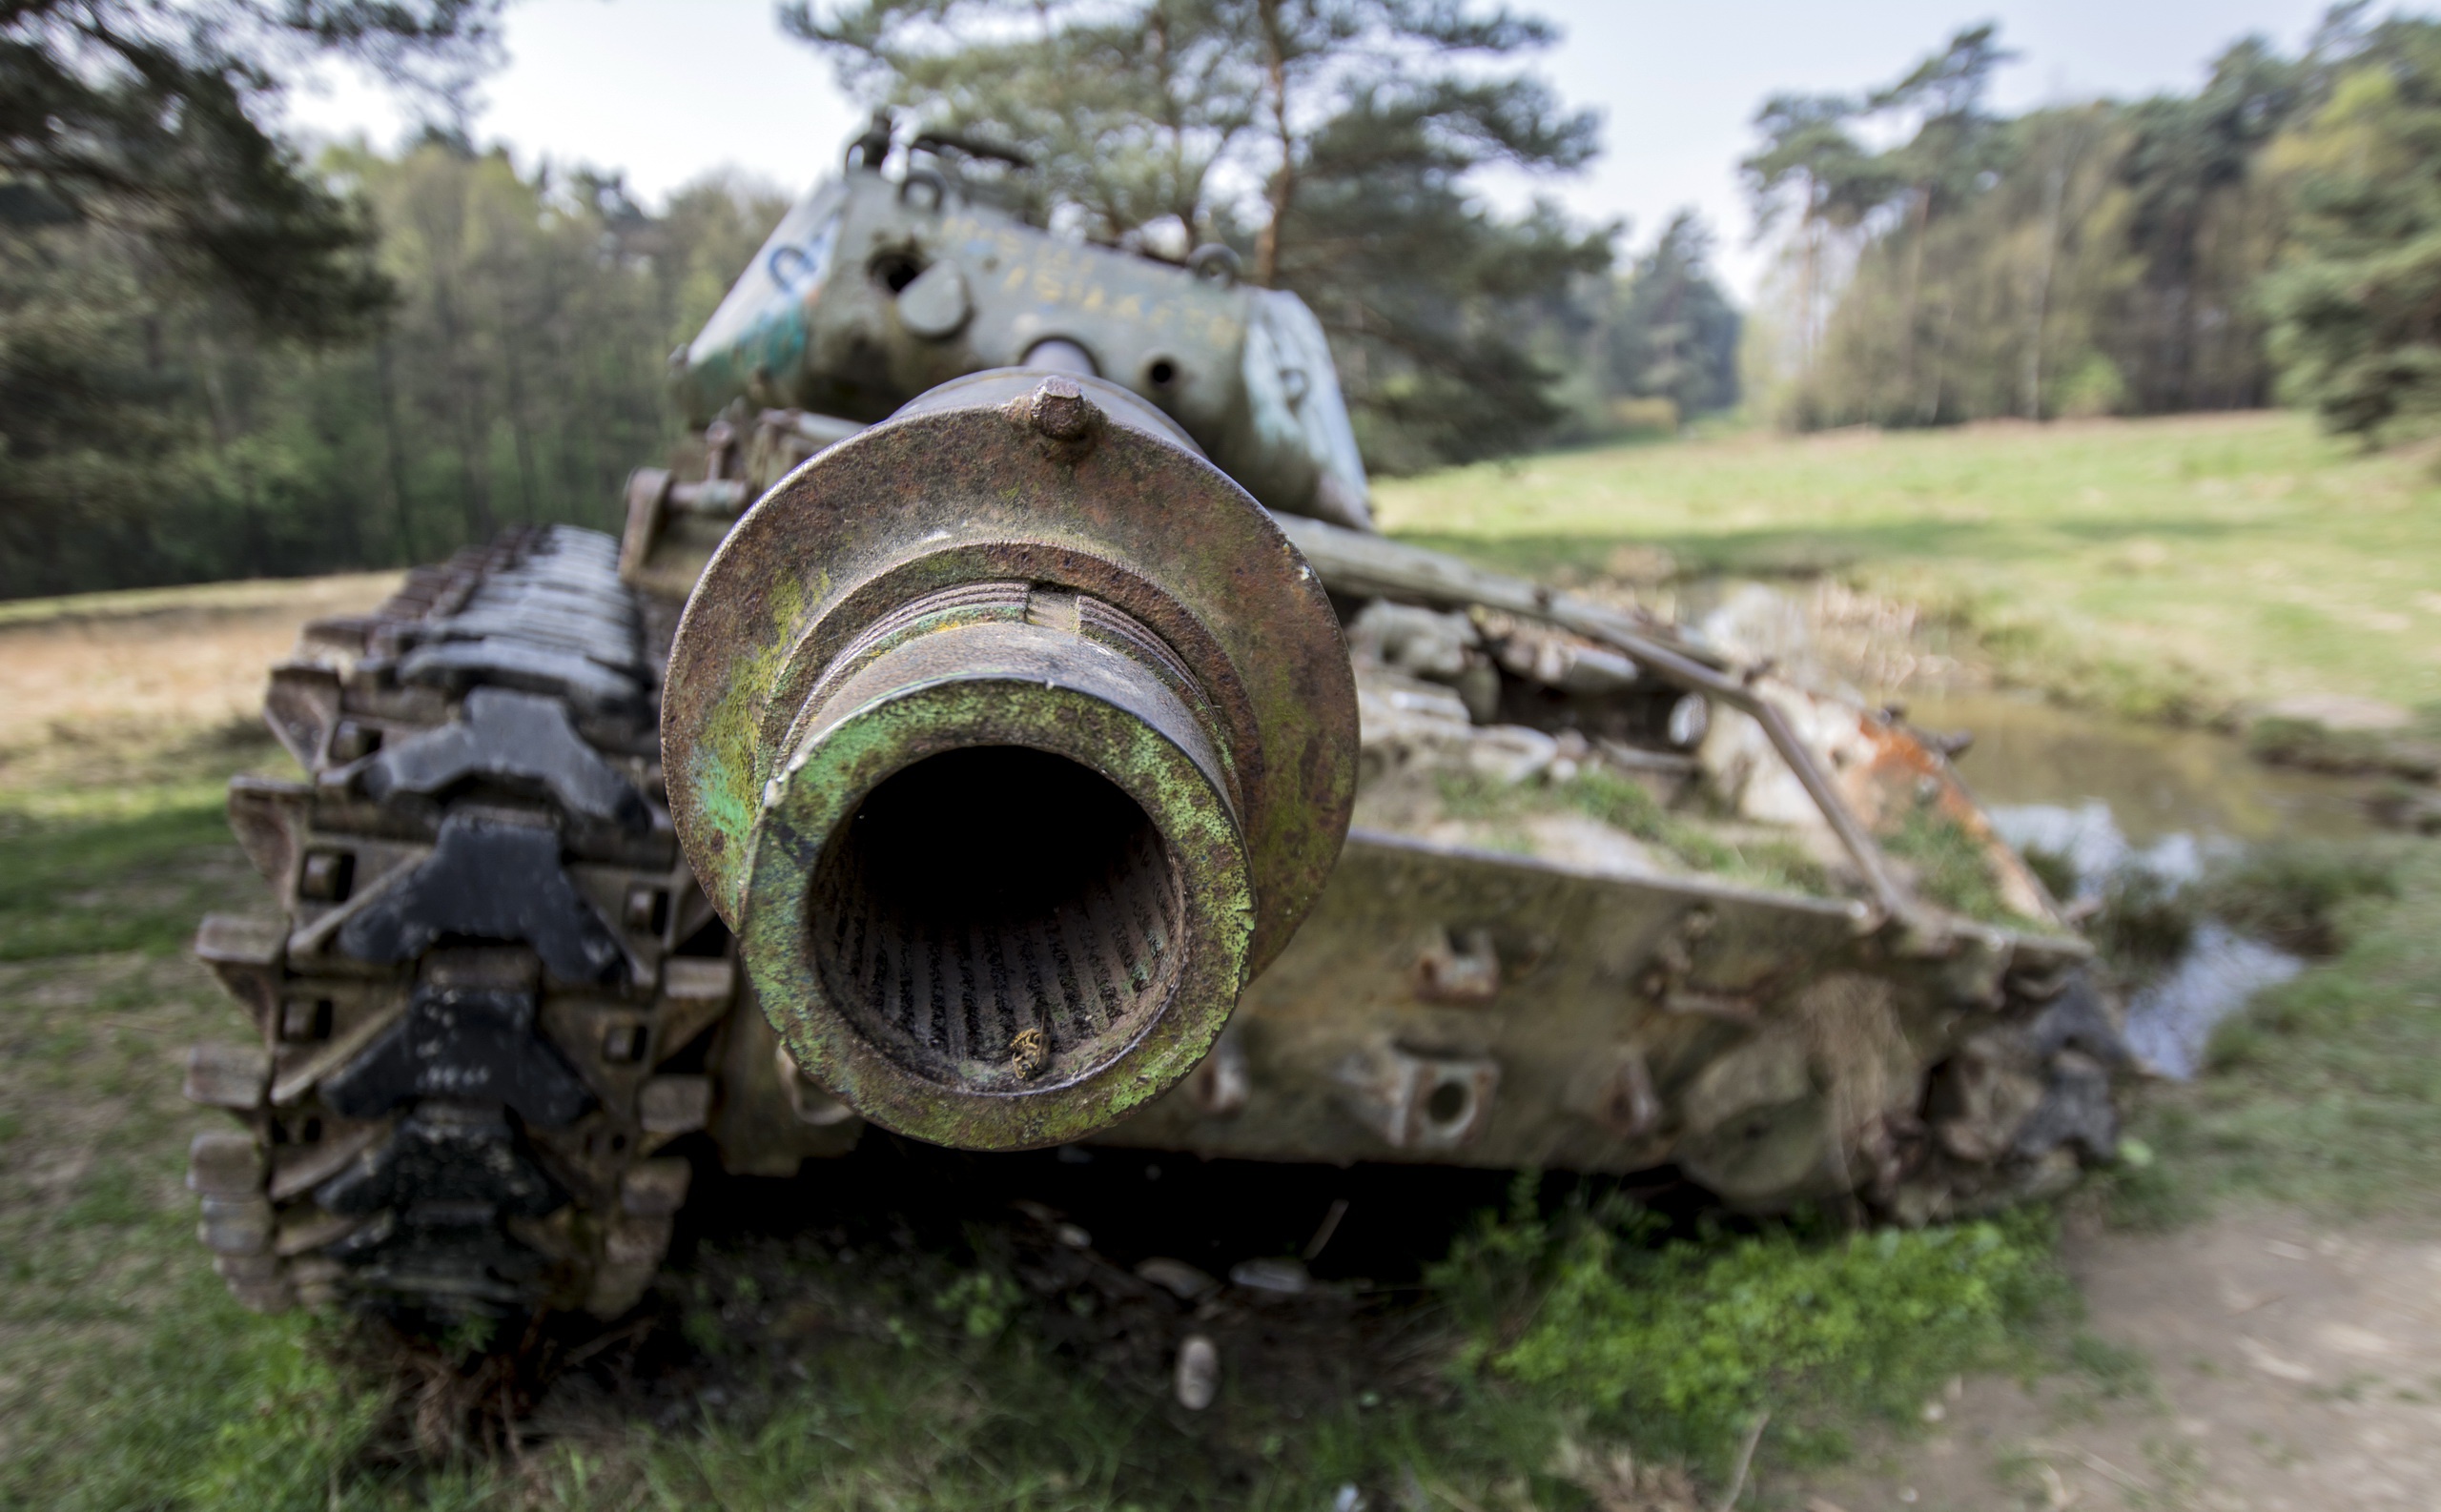 General 2560x1586 tank military abandoned depth of field M41 Walker Bulldog